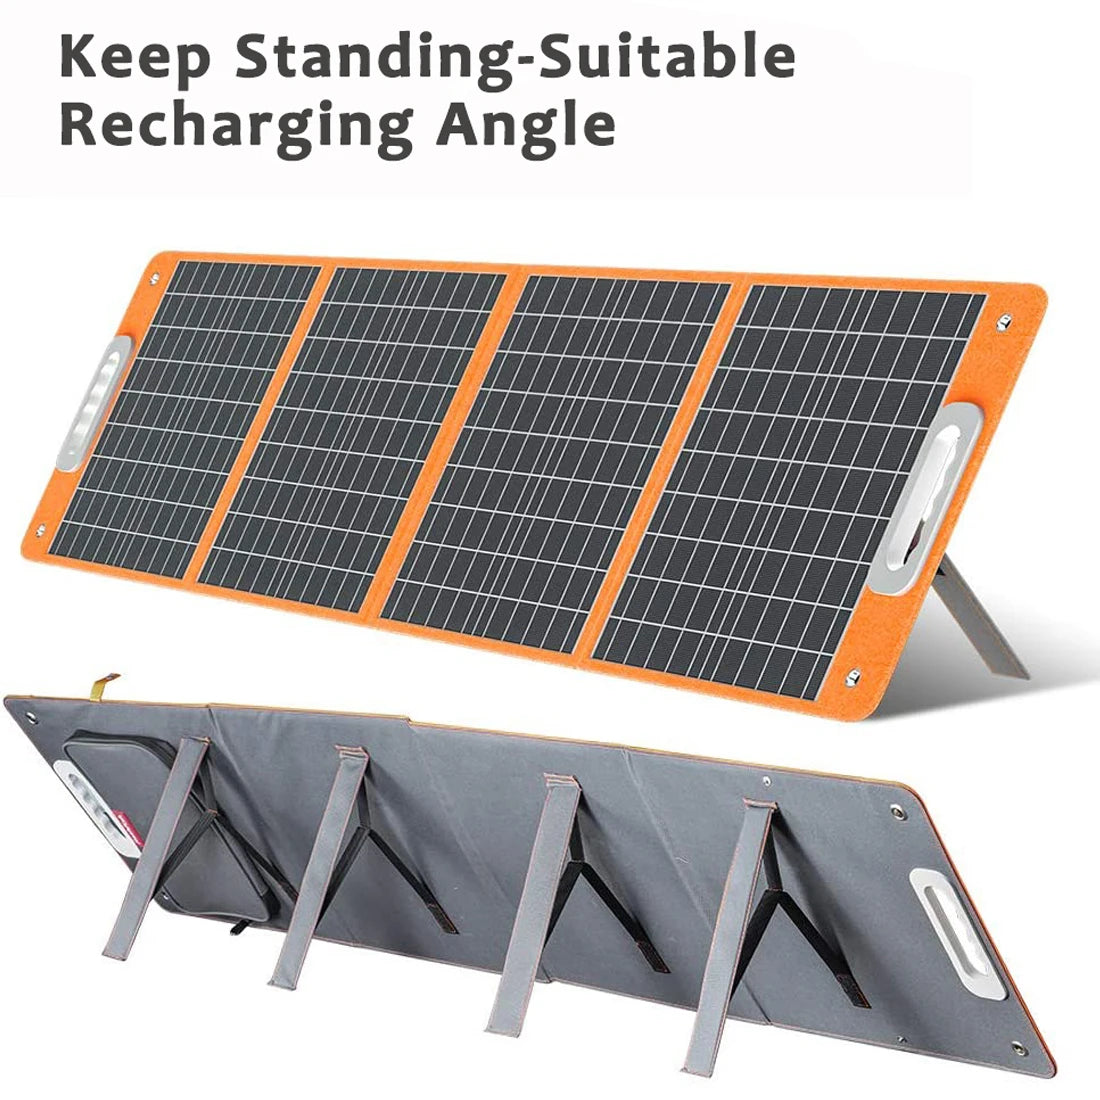 FlashFish Solar Panel, Optimal angle for recharging: tilt up or down for efficient power transfer